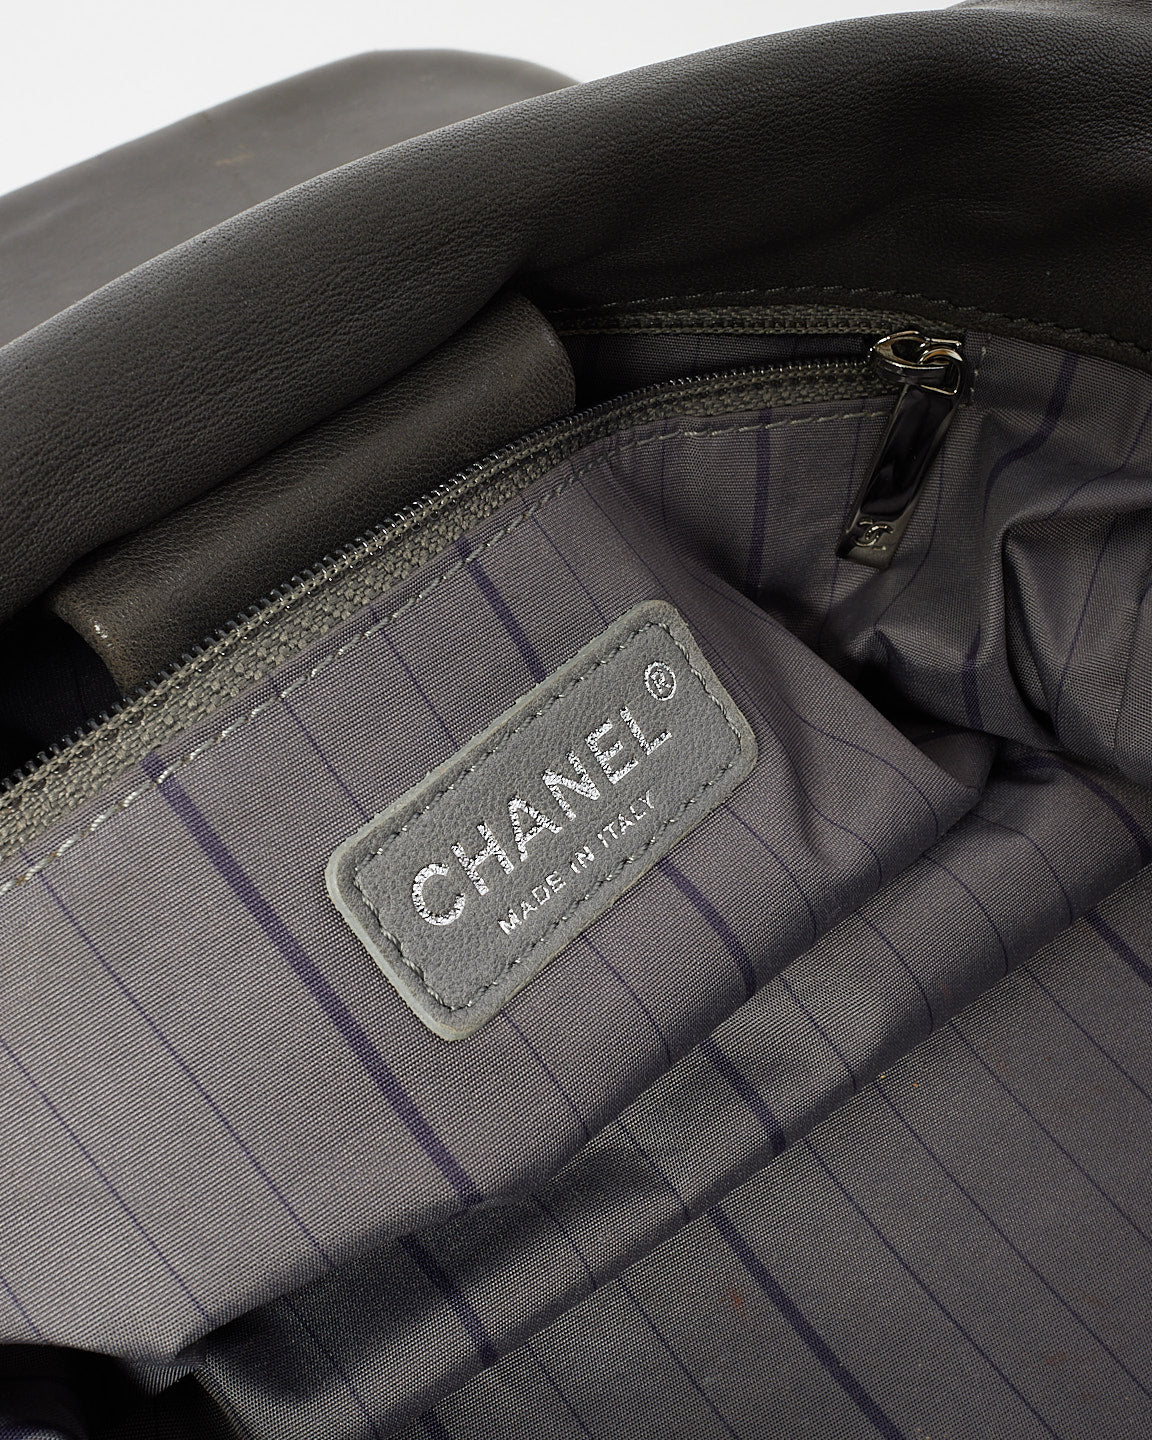 Chanel Grey Leather Studded CC Accordion Bag